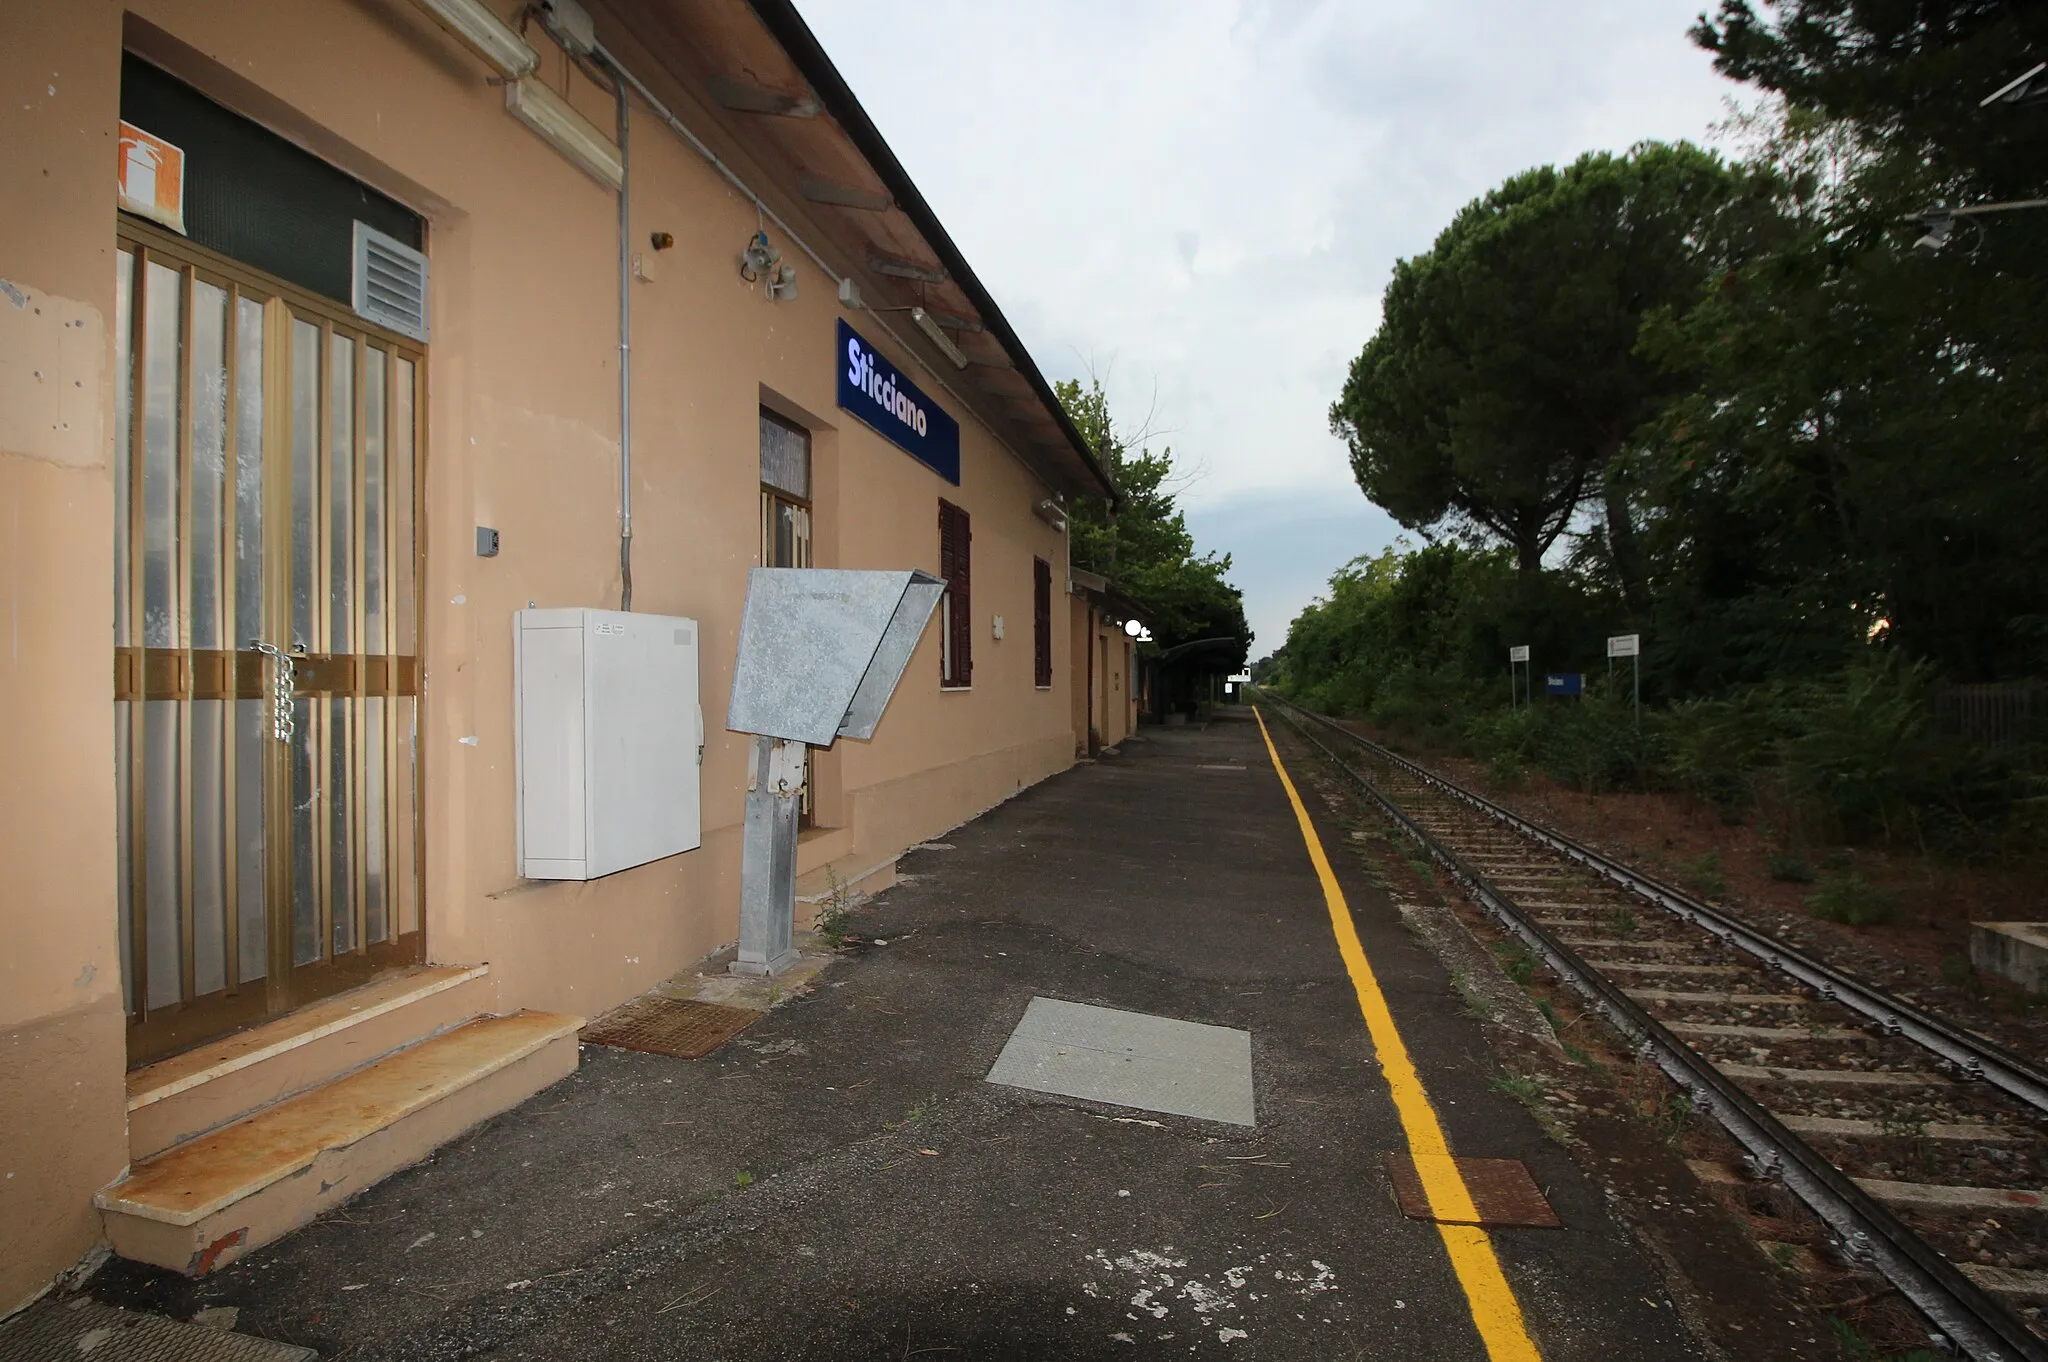 Photo showing: Train station of Sticciano, Sticciano Scalo, hamlet of Roccastrada, Province of Grosseto, Tuscany, Italy